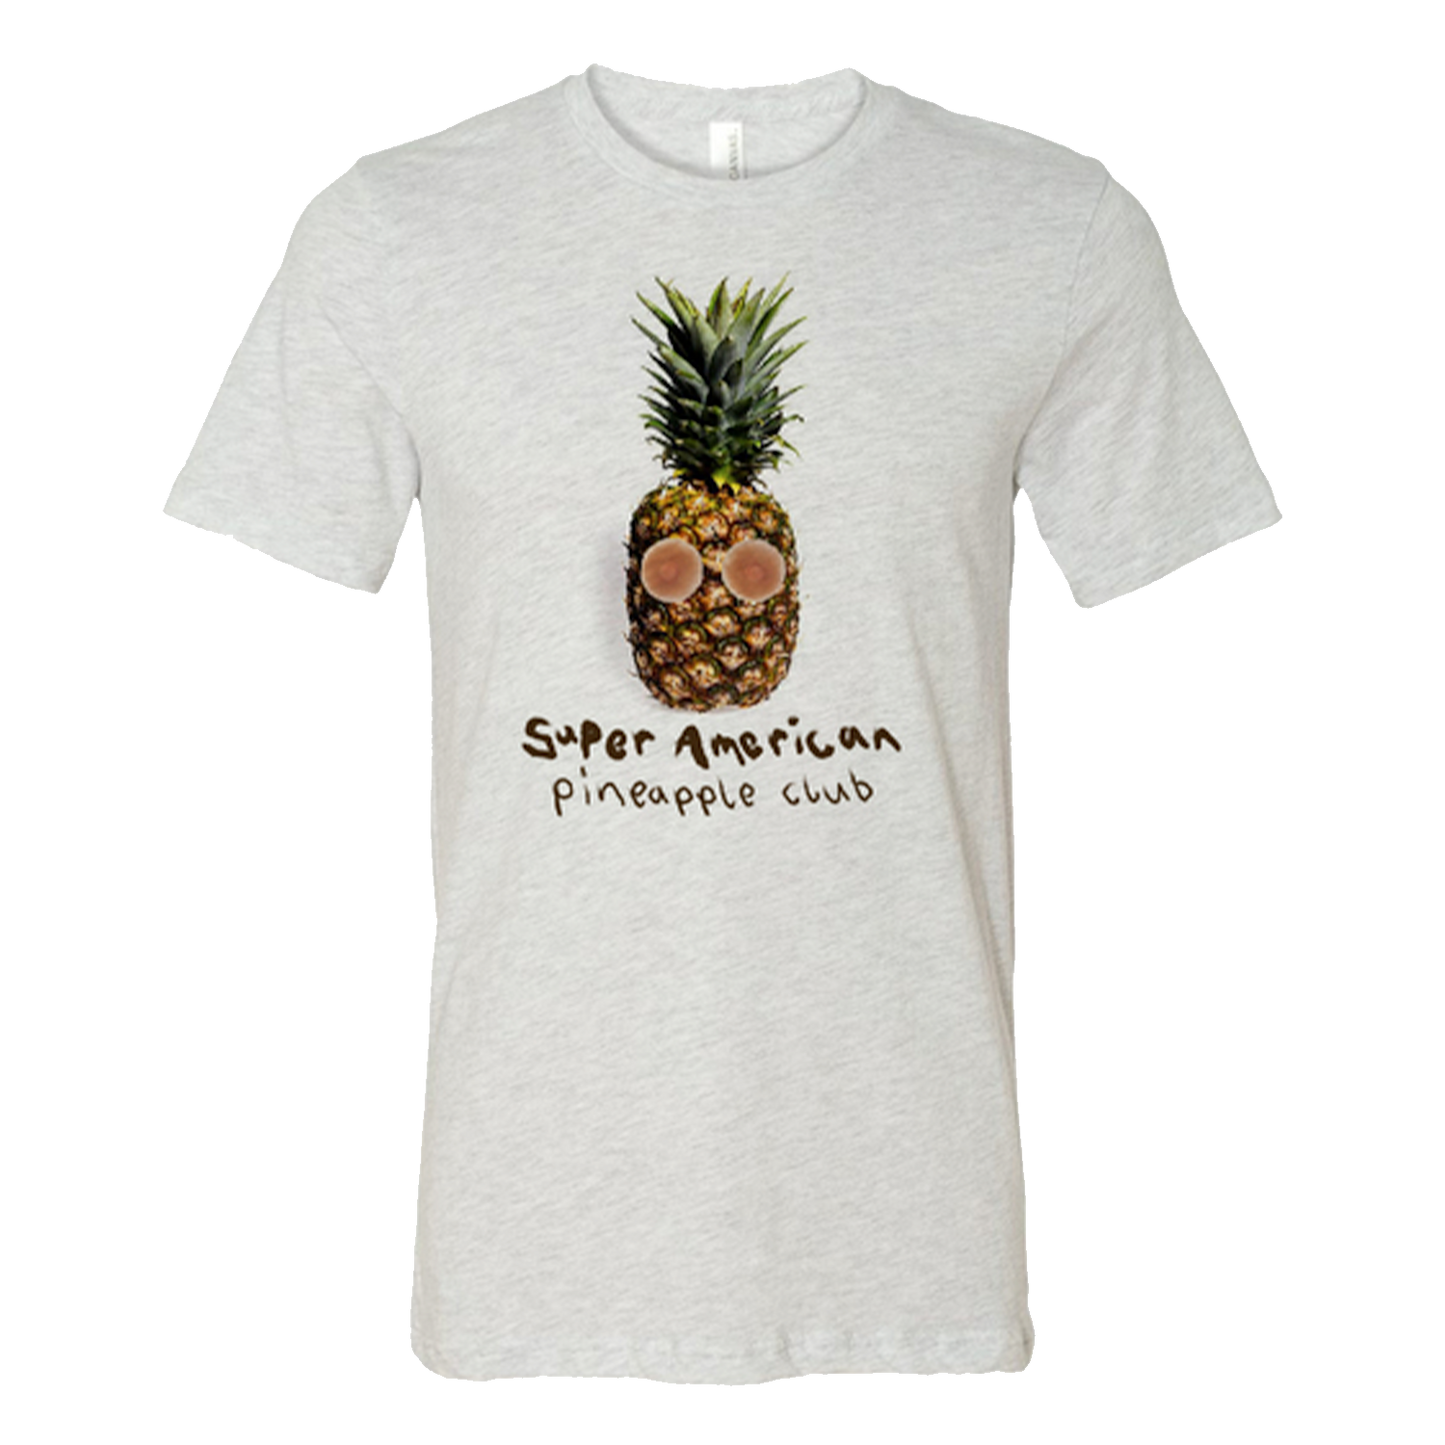 Super American - "Pineapple Club" T-Shirt